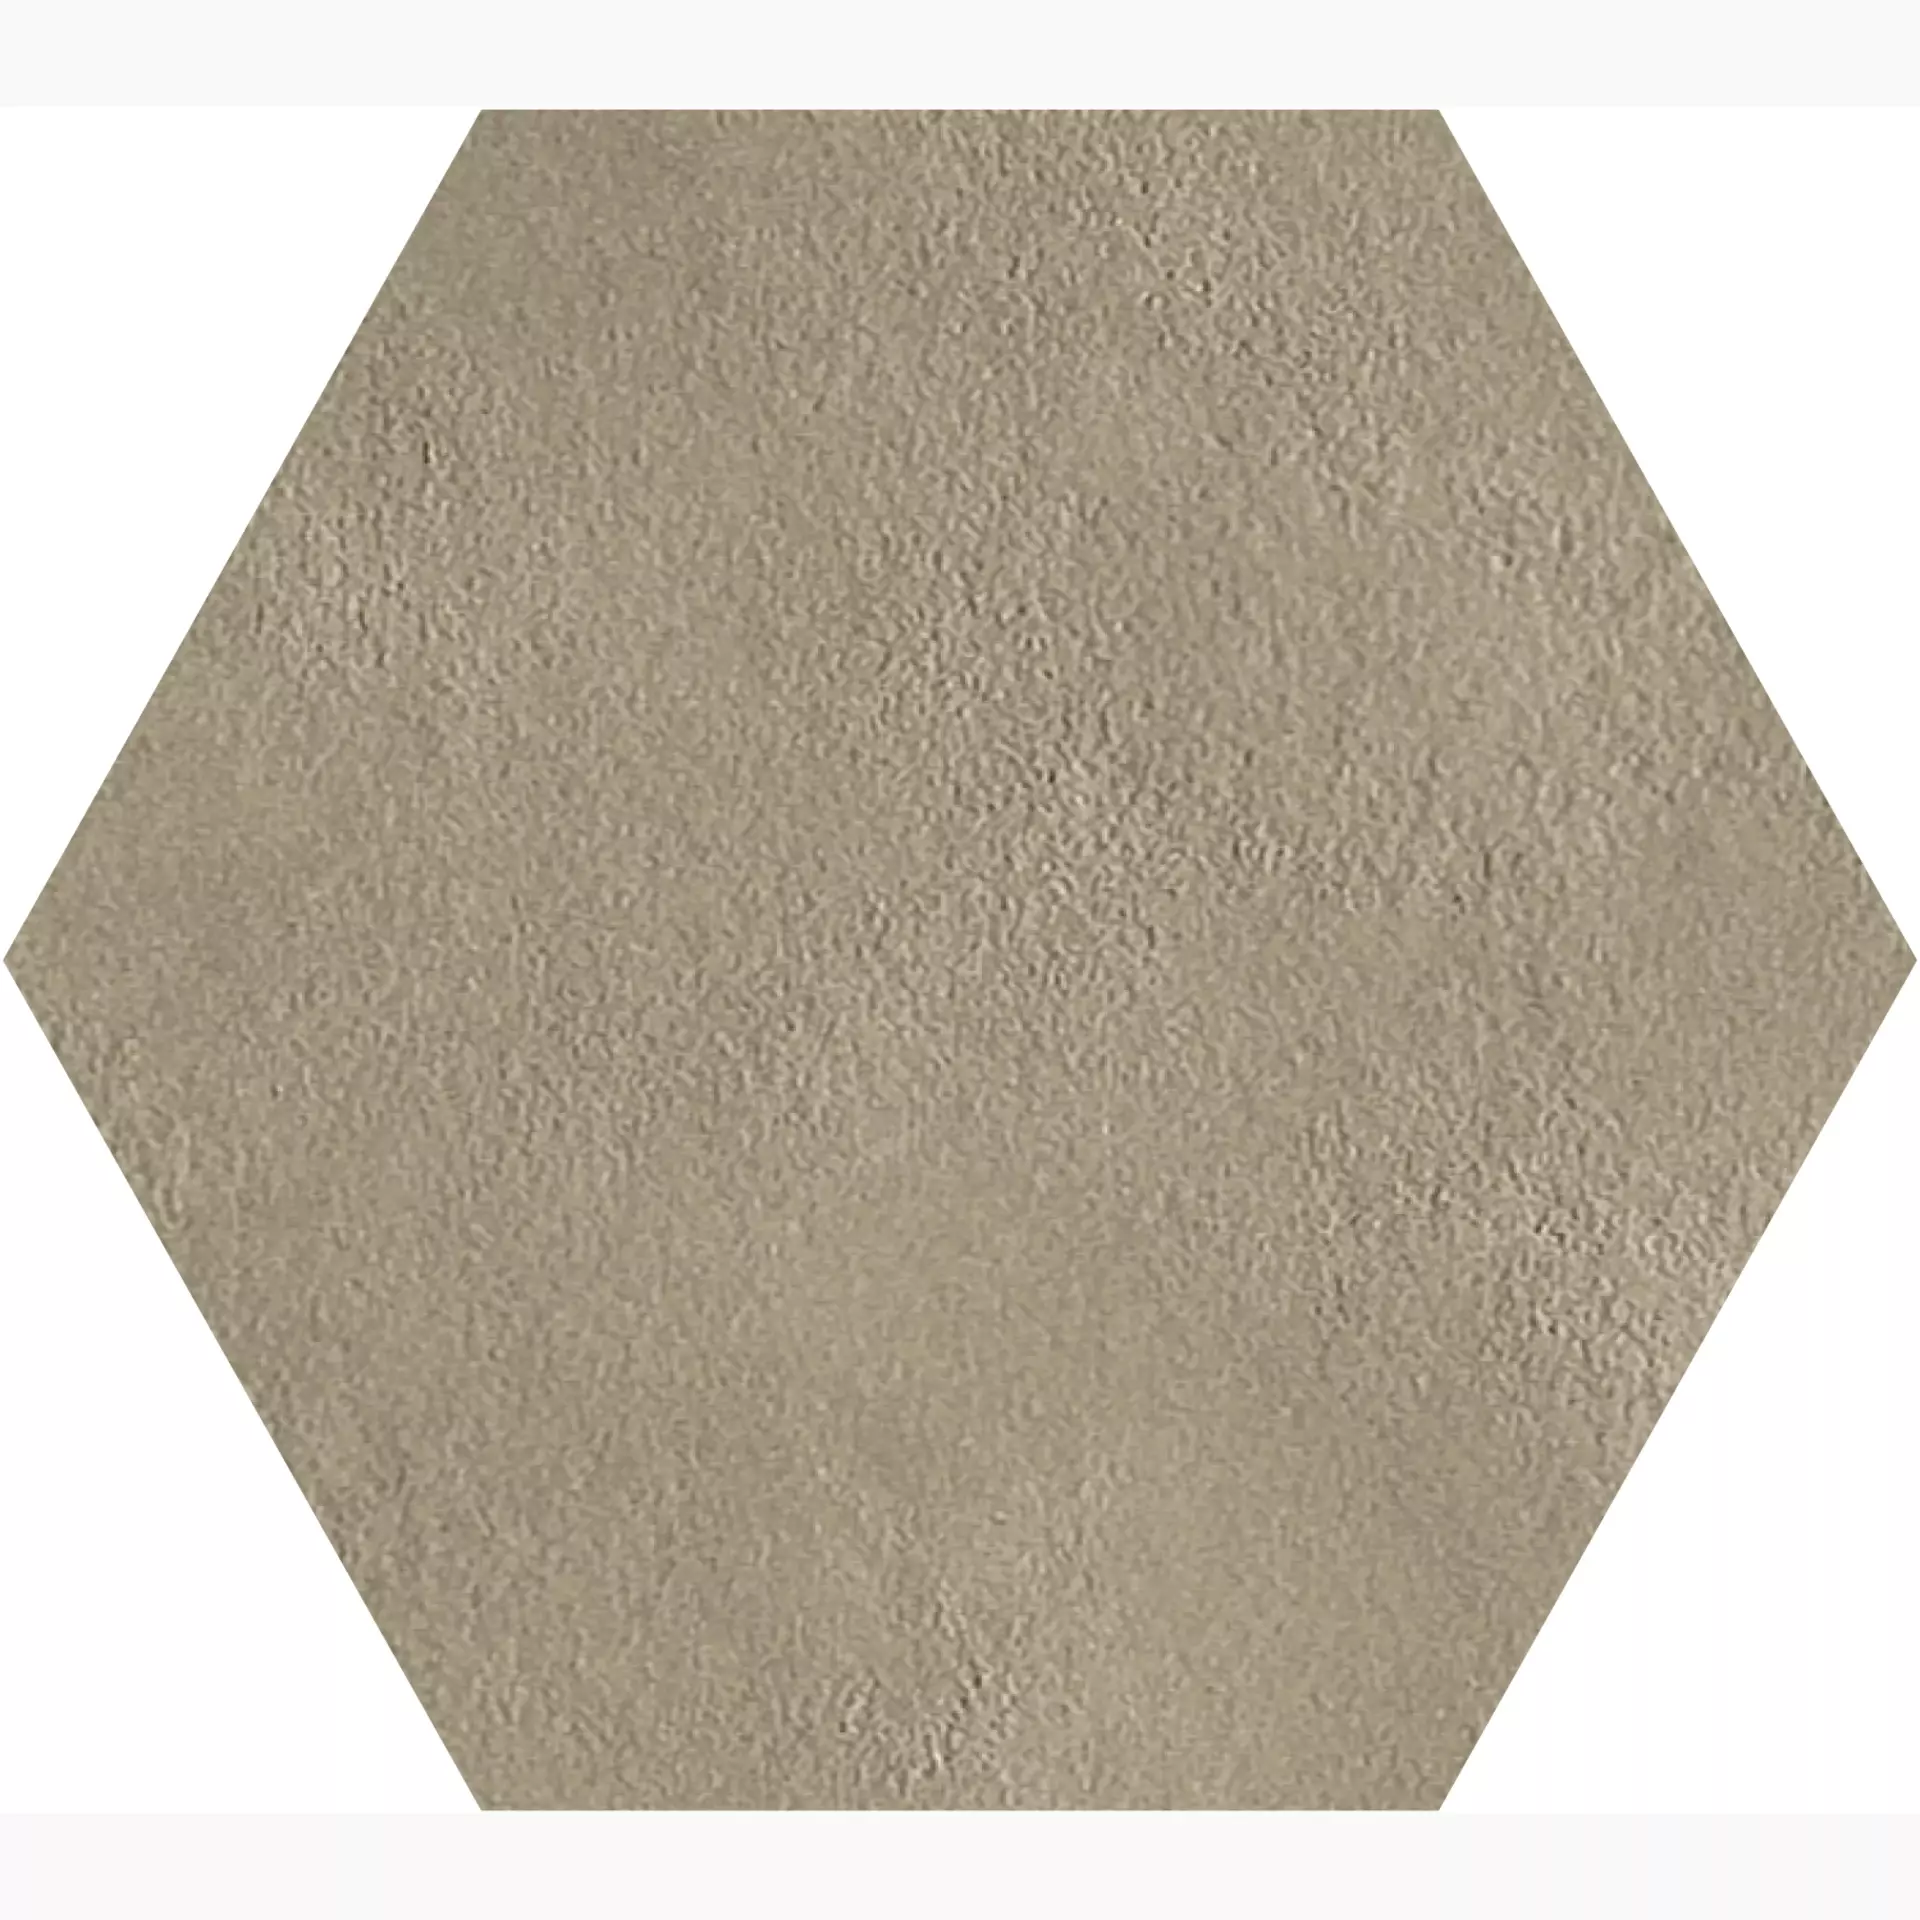 Gigacer Argilla Fog Material Decor Small Hexagon PO9ESAFOG 16x18cm 6mm